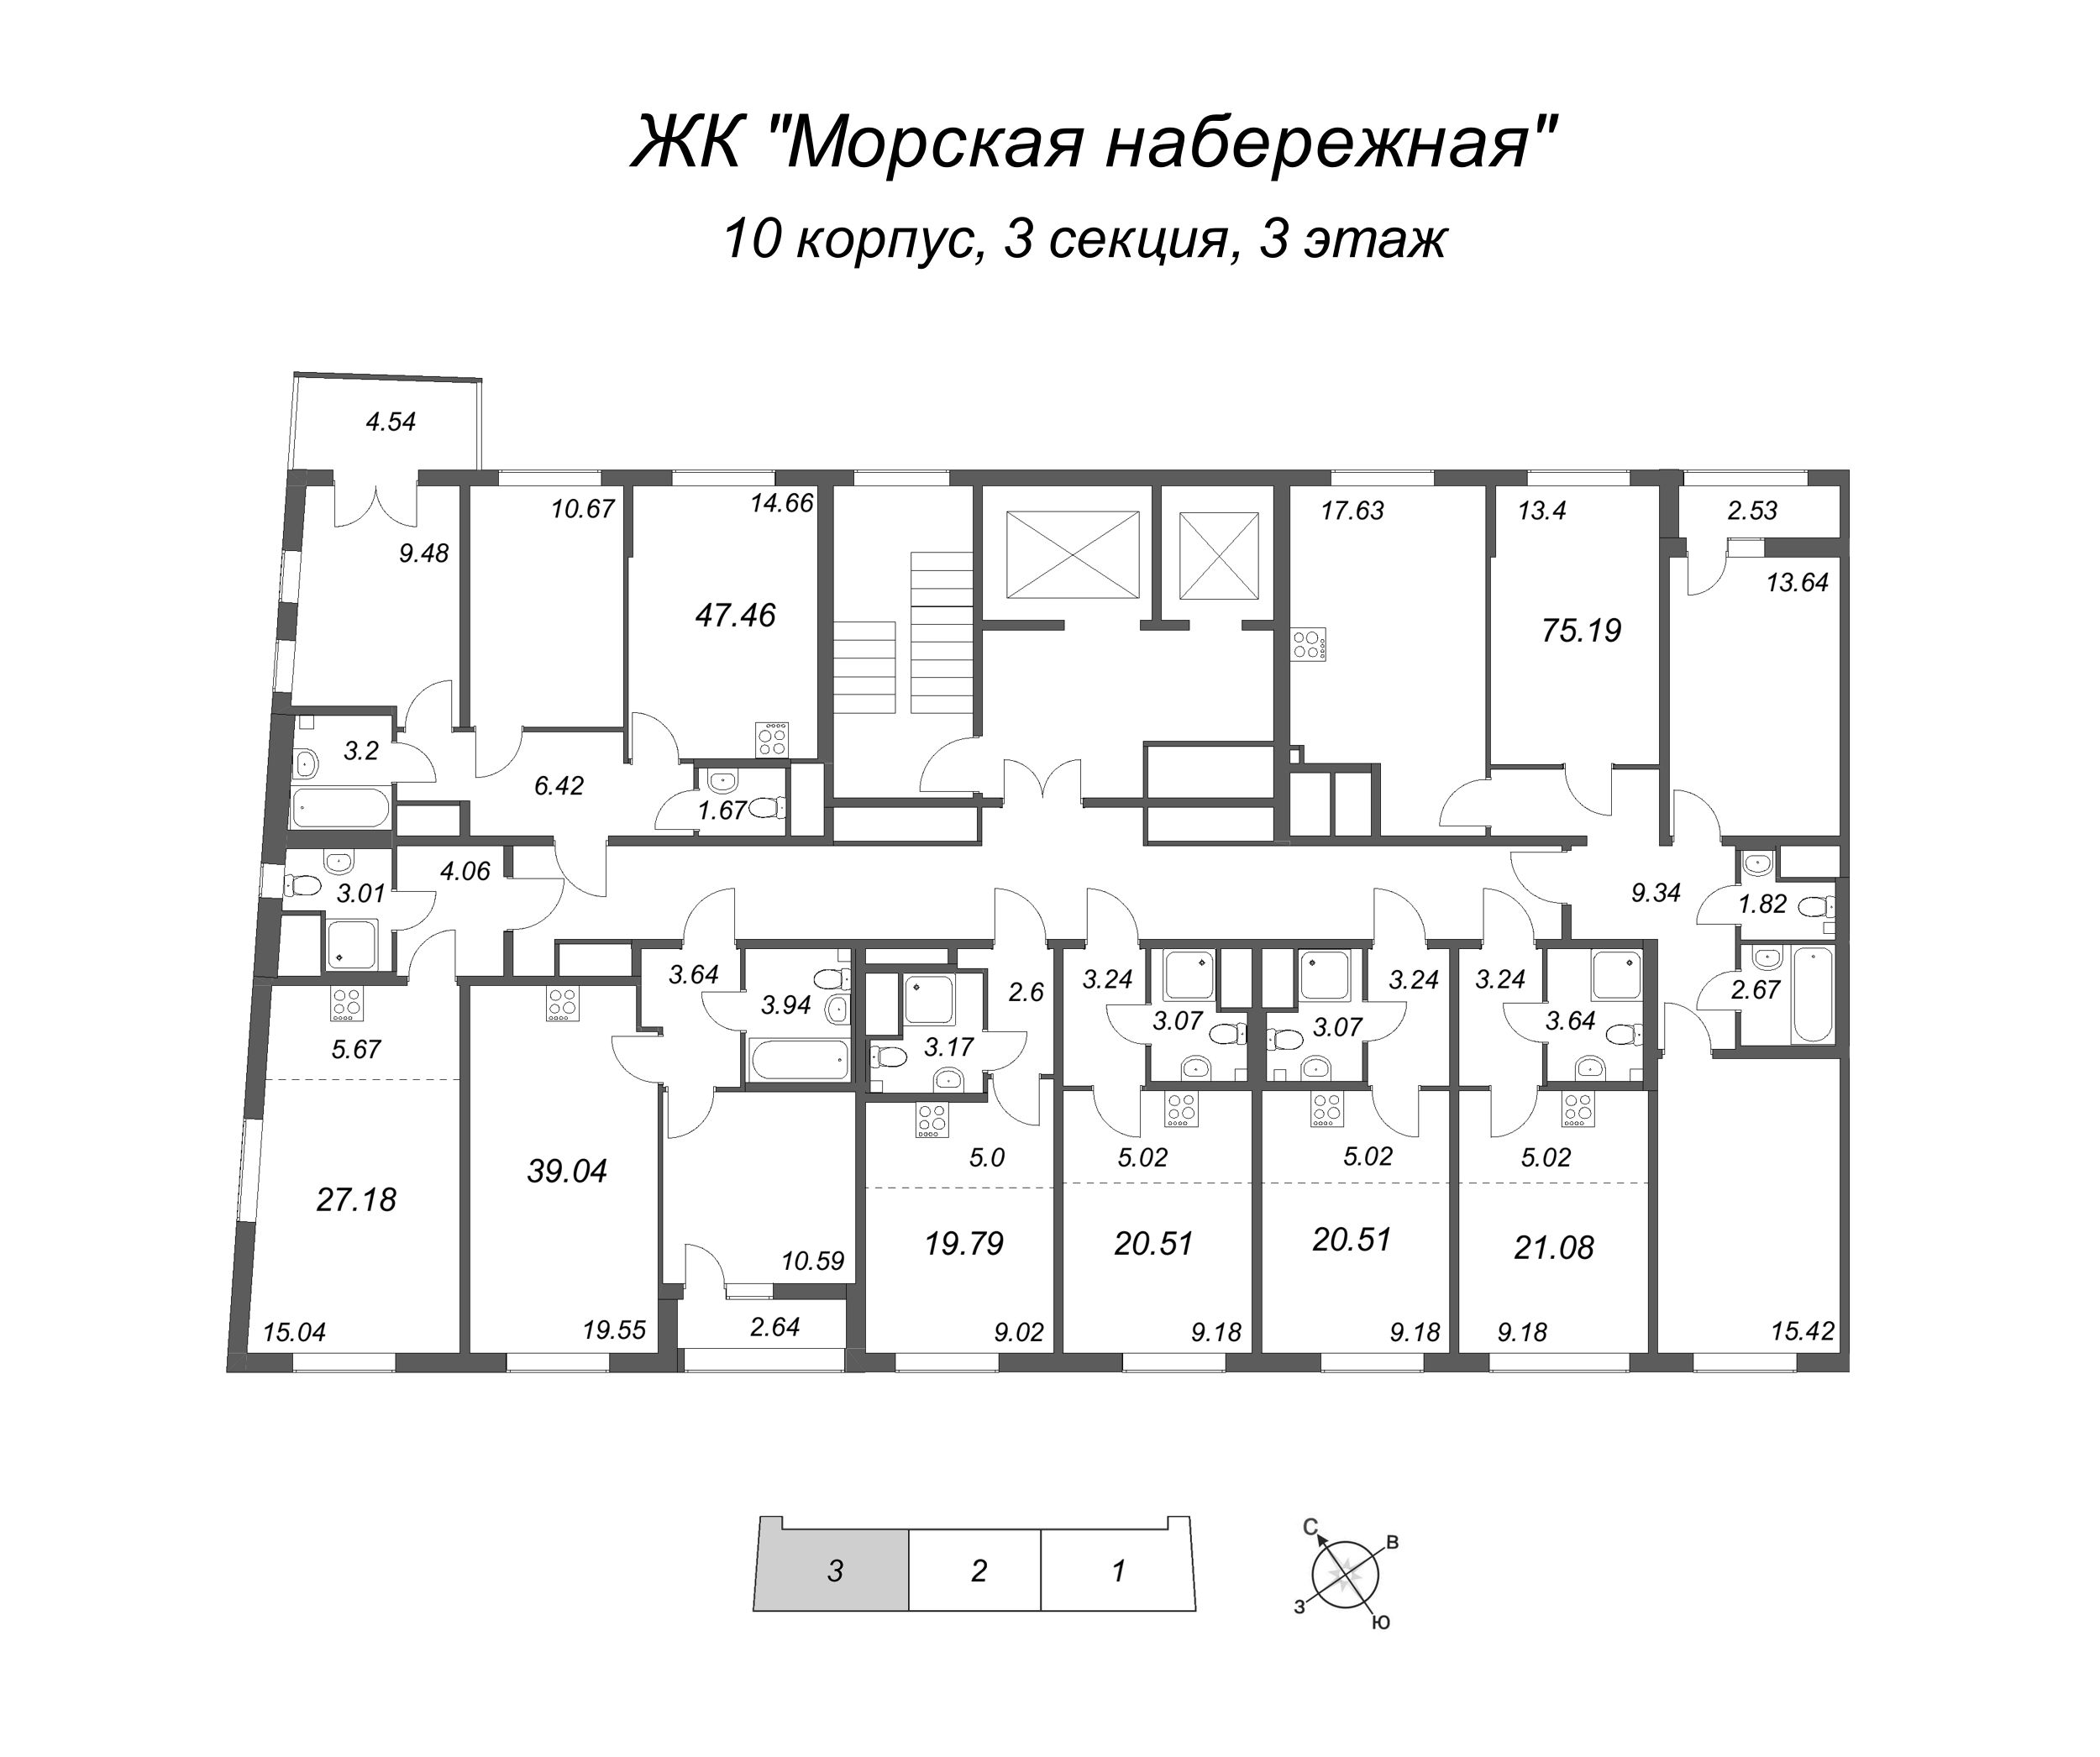 4-комнатная (Евро) квартира, 75.19 м² - планировка этажа